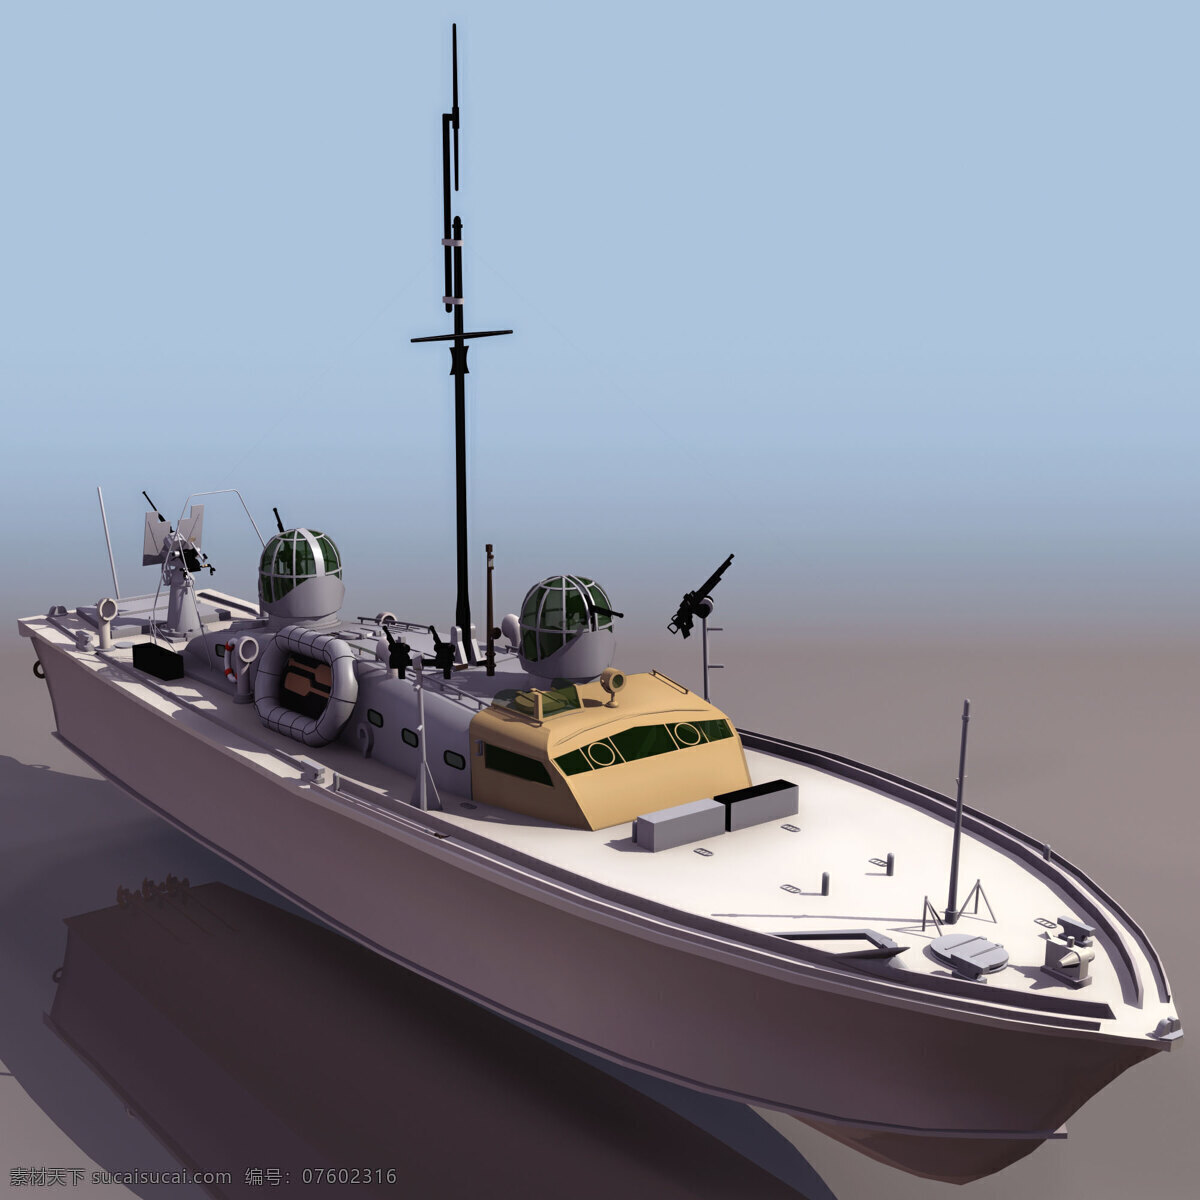 demora 军事模型 小型战舰 海军武器库 3d模型素材 其他3d模型